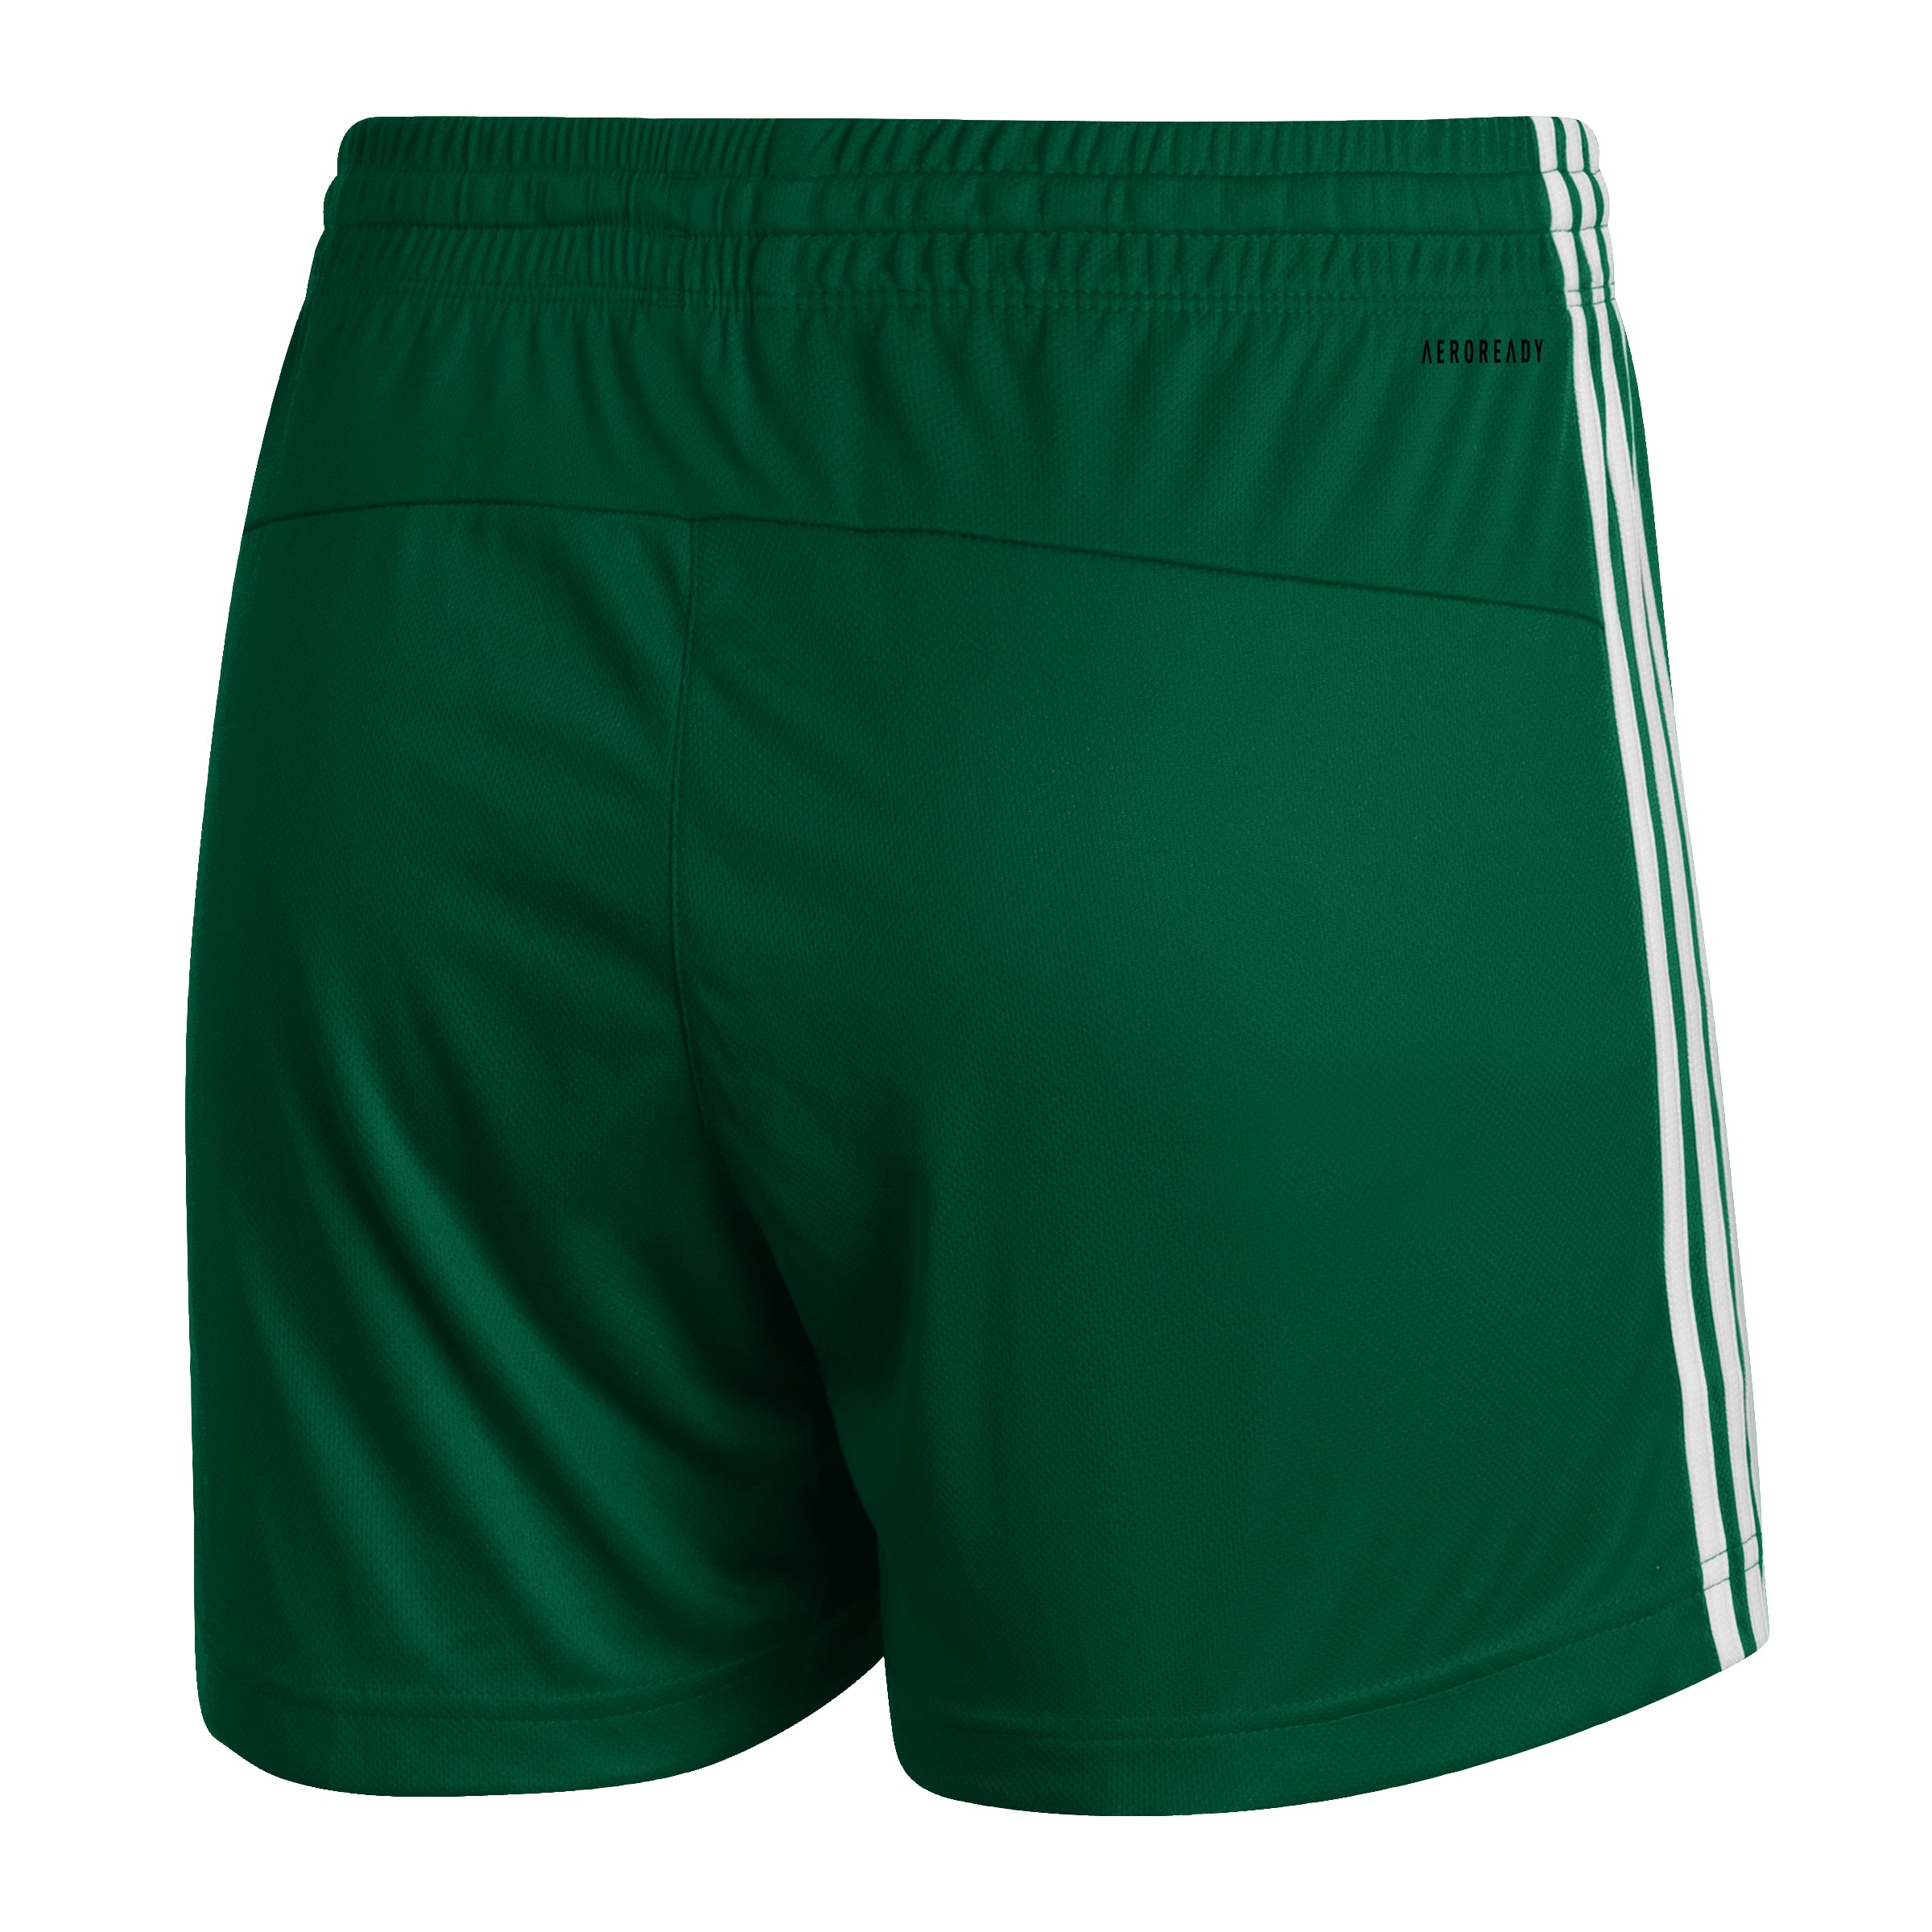 Miami Hurricanes Women's adidas AEROREADY Three-Stripe Knit Training Shorts - Green